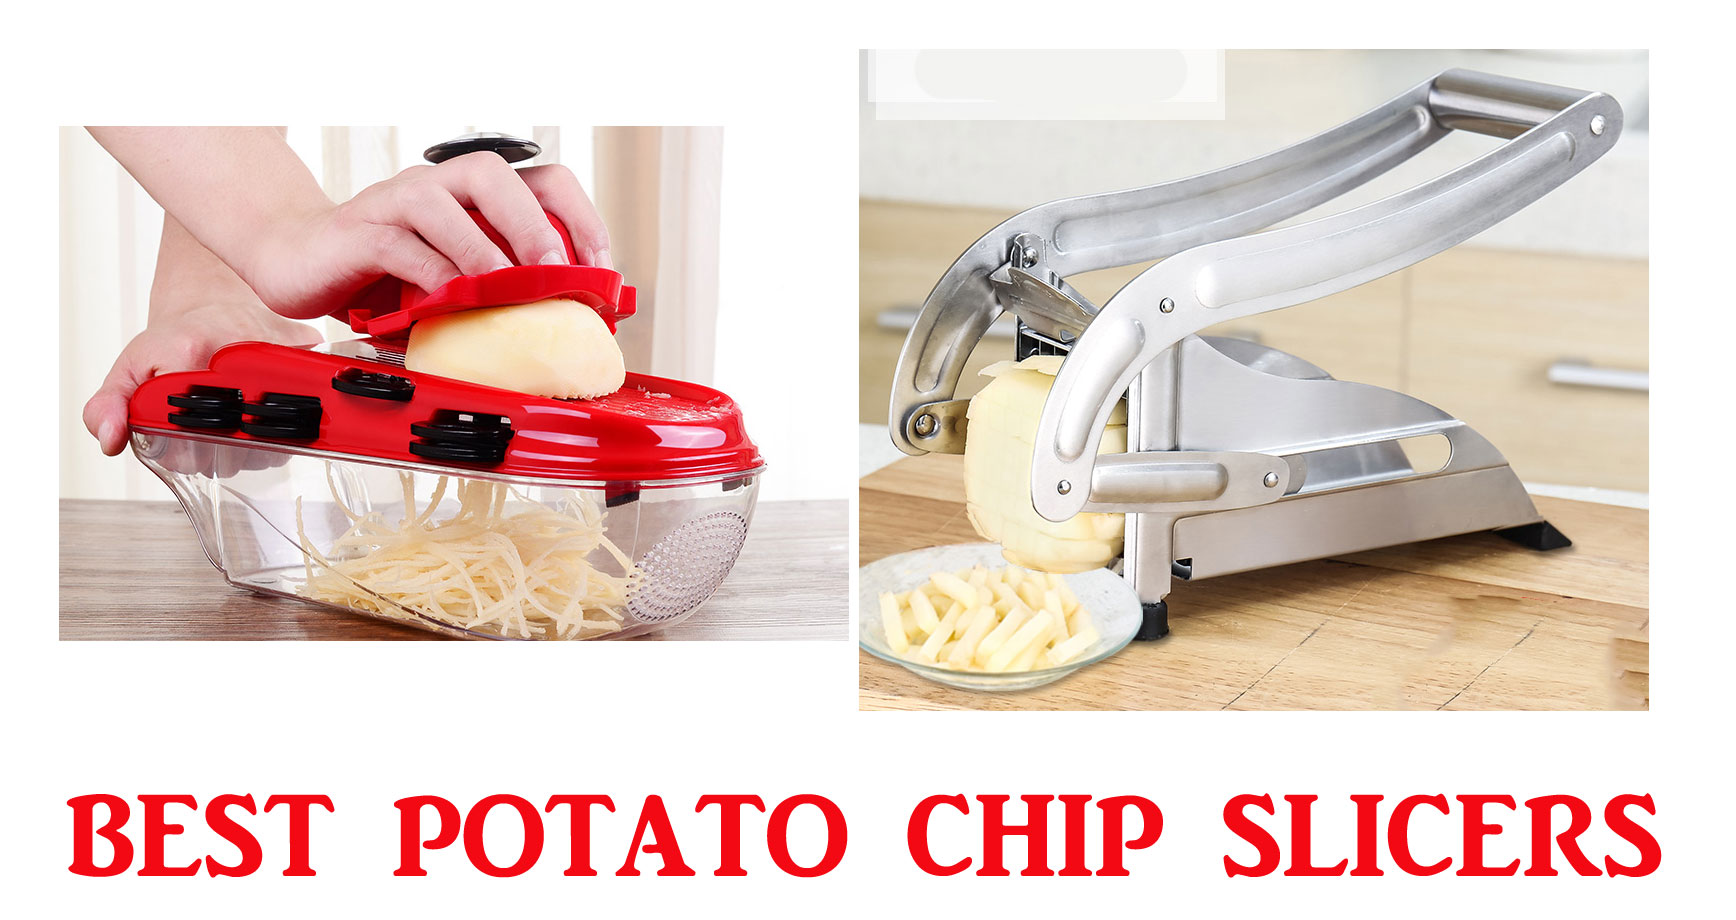 potato chip slicer bed bath and beyond